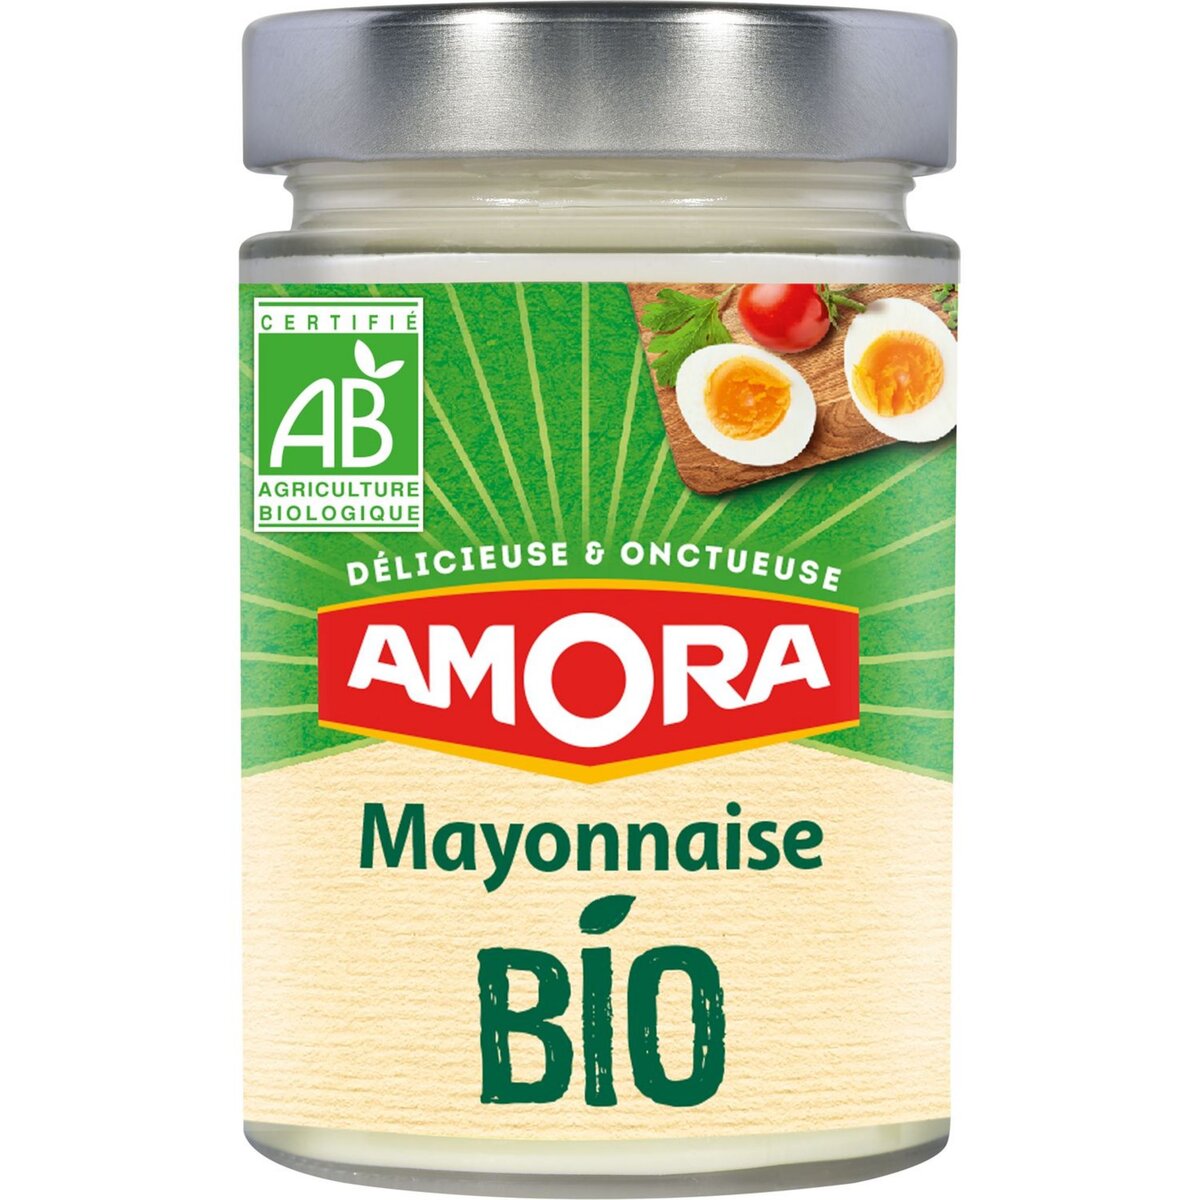 AMORA Amora Mayonnaise bio 270g 270g